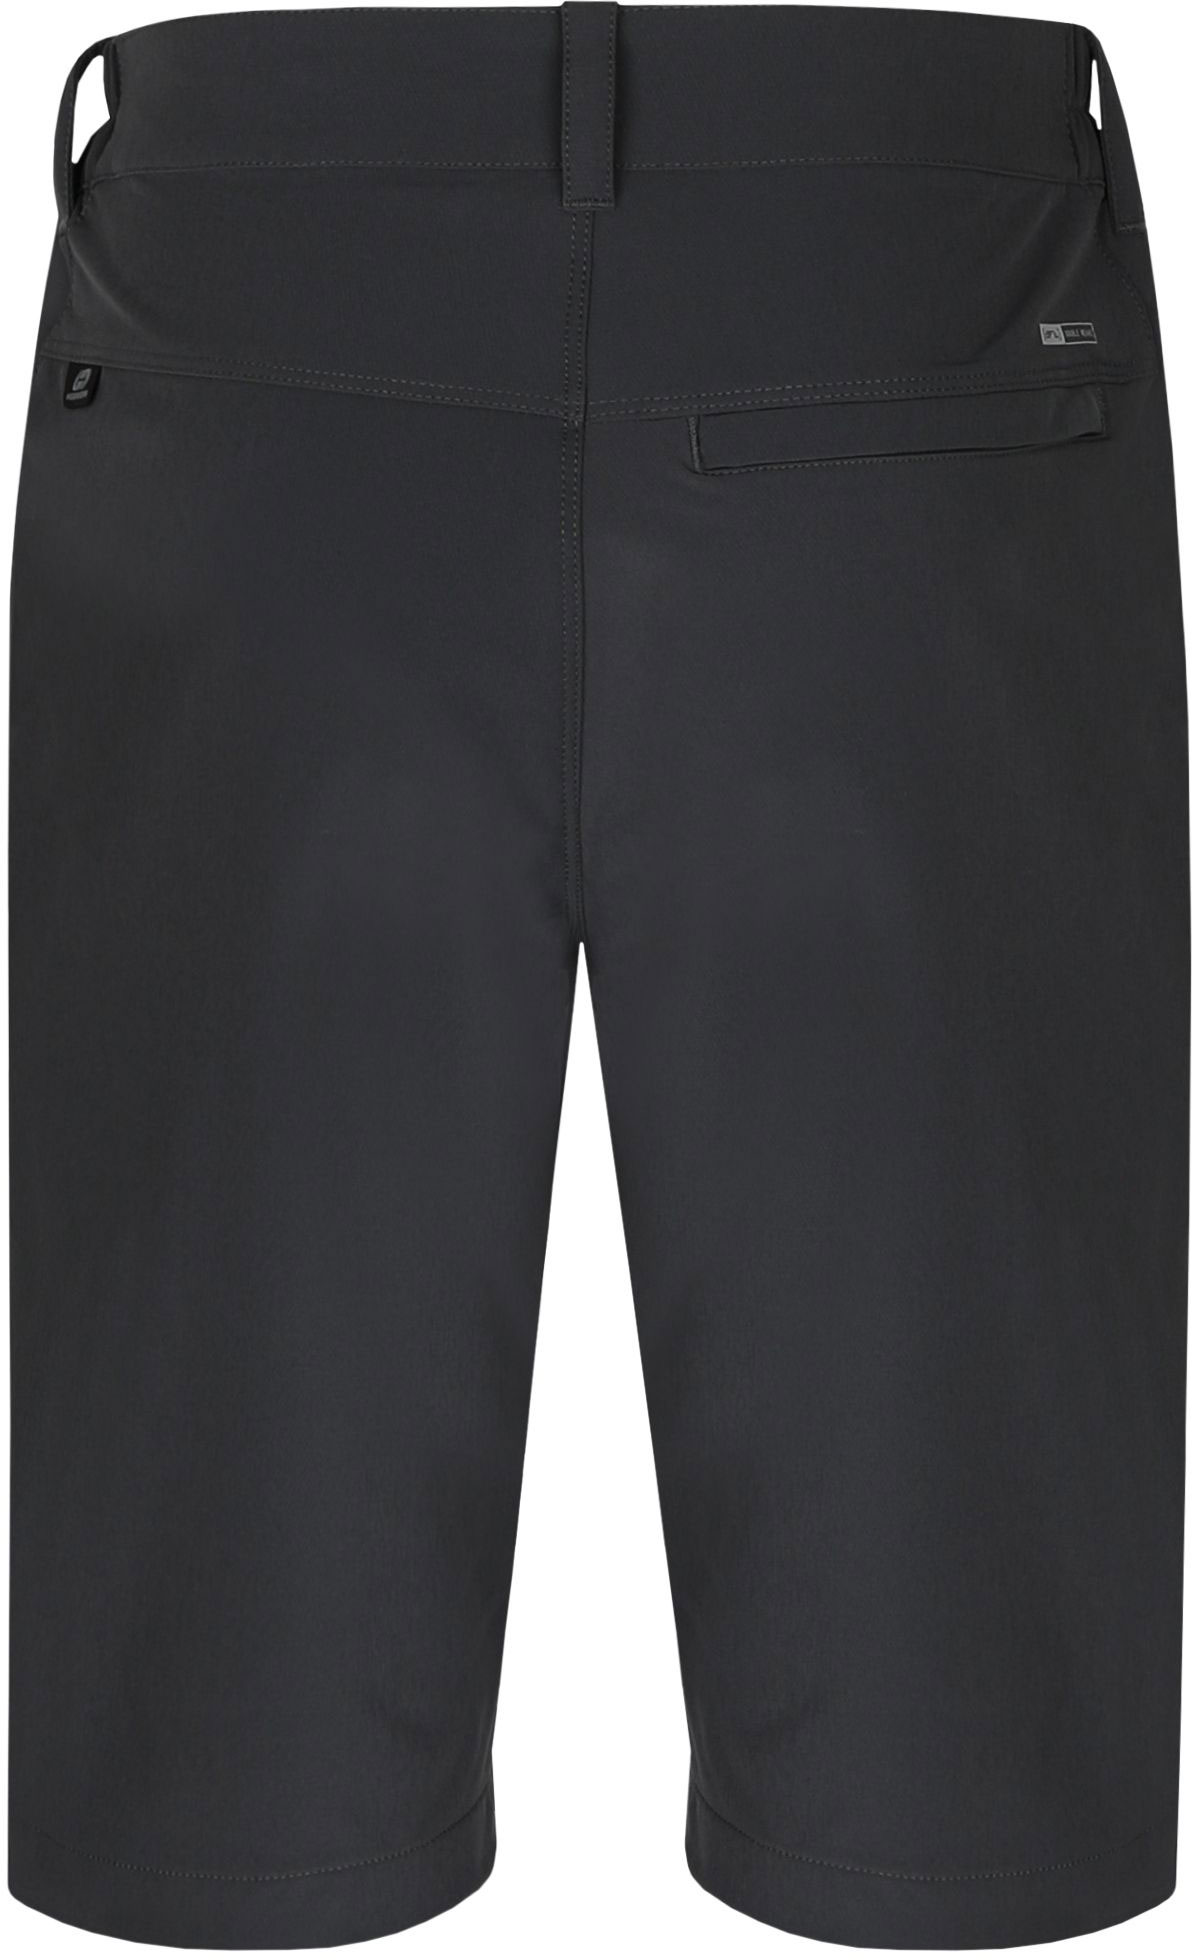 Men's stretch shorts